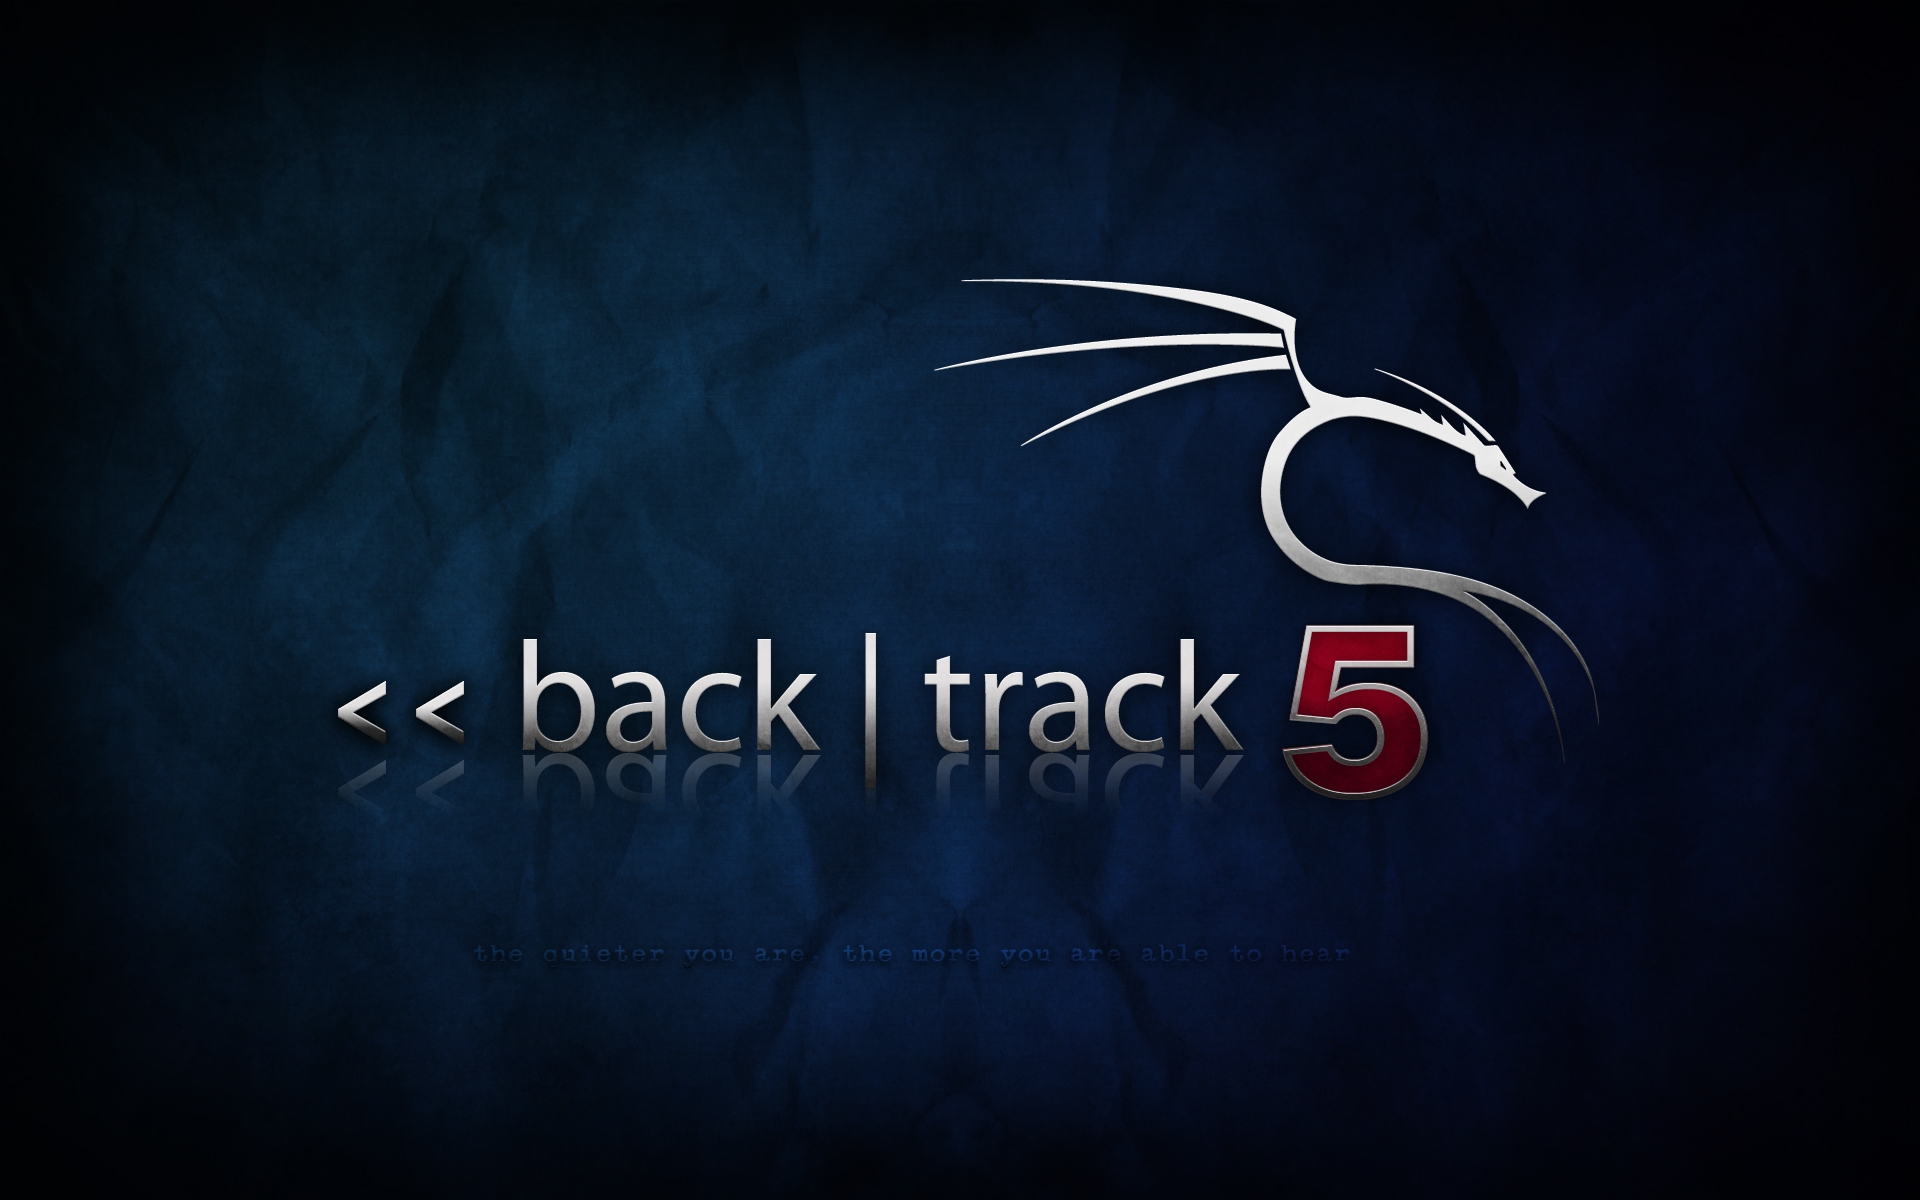 backtrack-5-blue-2.png